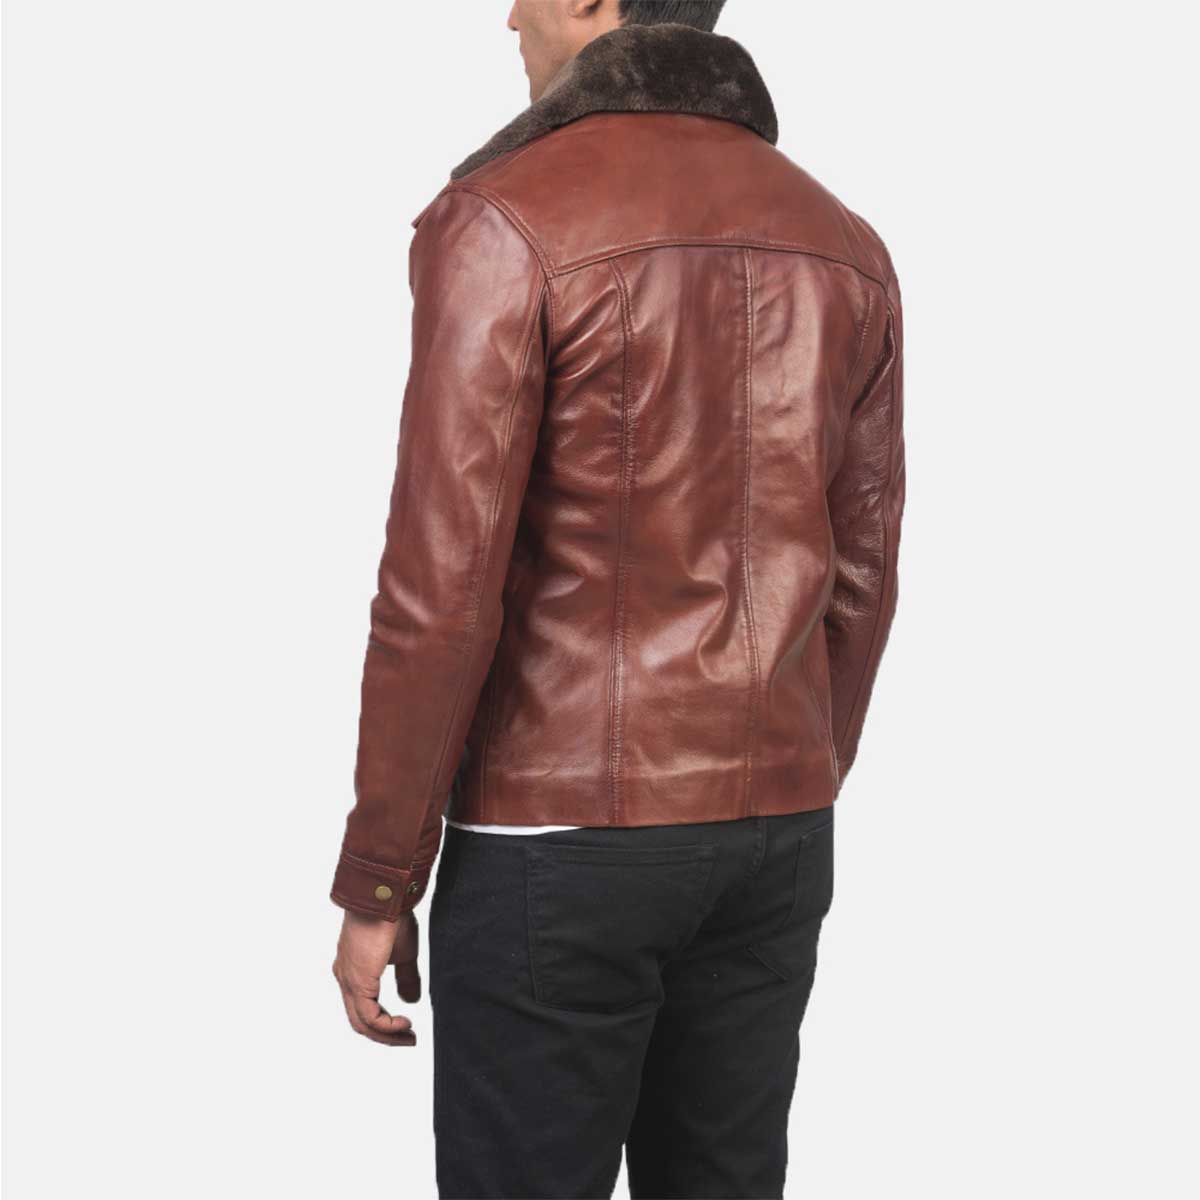 Hart Fur Evan Brown Leather Jacket - The Vintage Leather